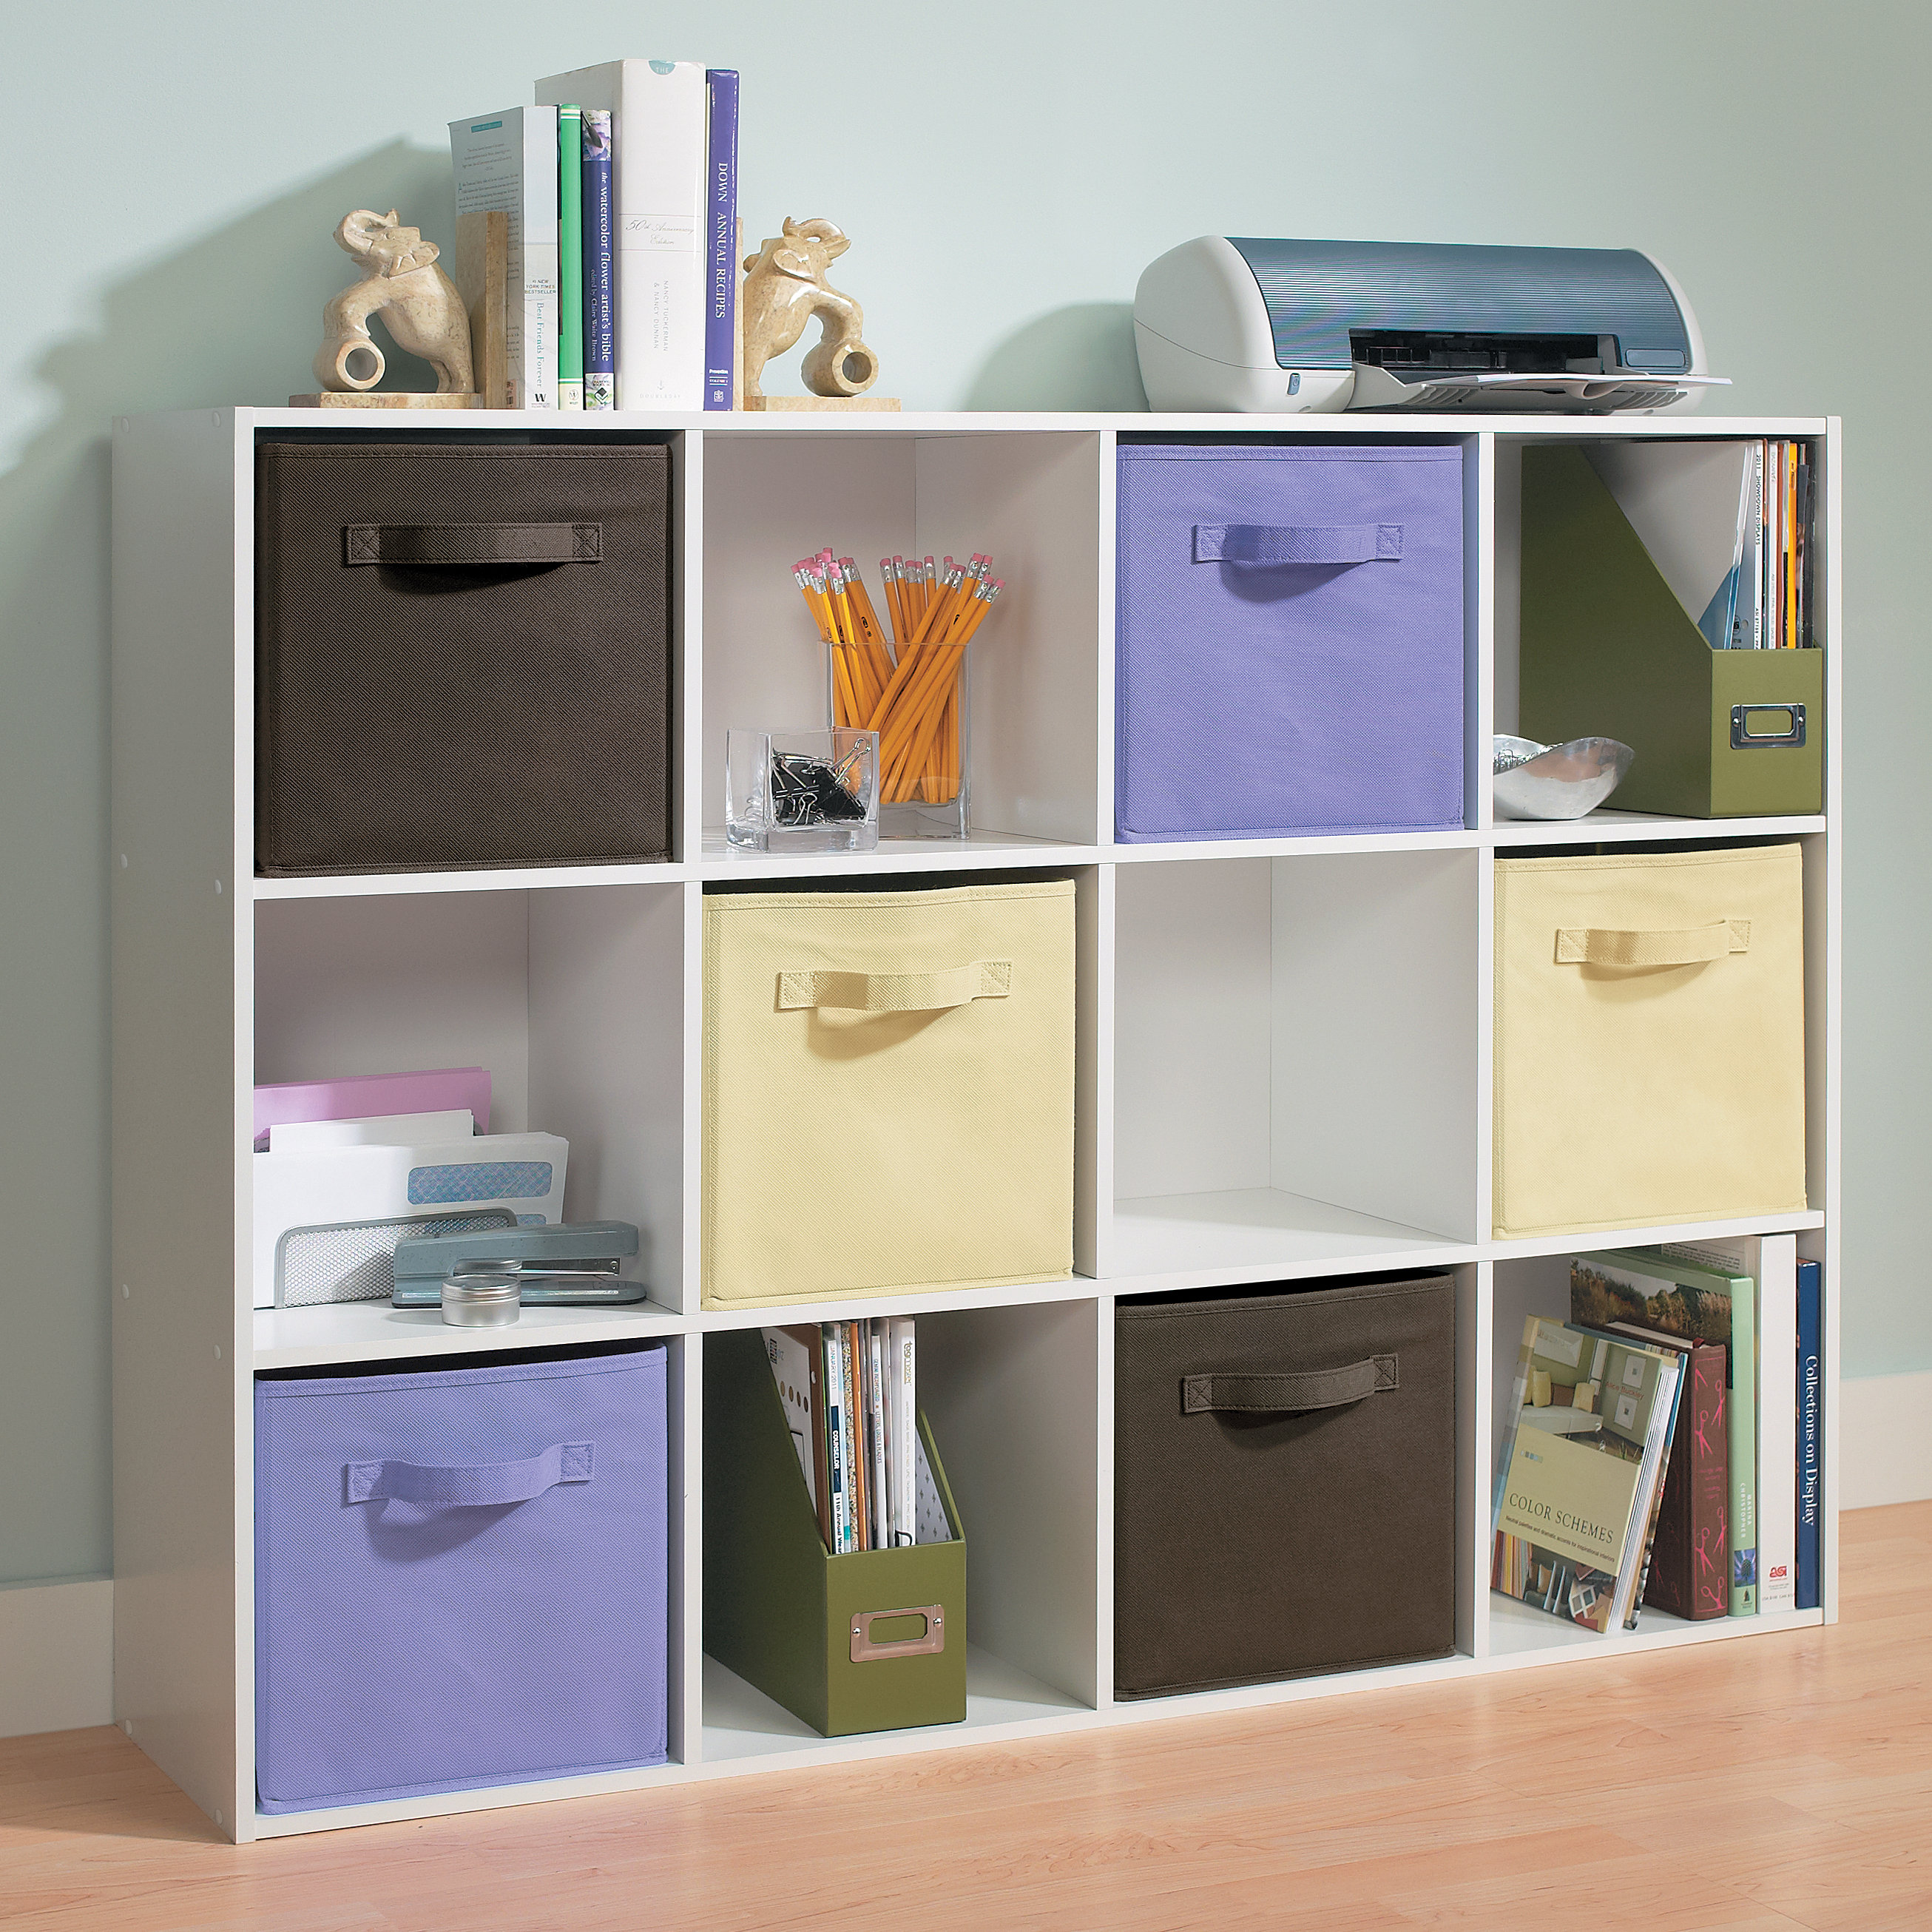 Cube Storage Organizer, 16-Cube Book Shelf, DIY Plastic Closet Cabinet